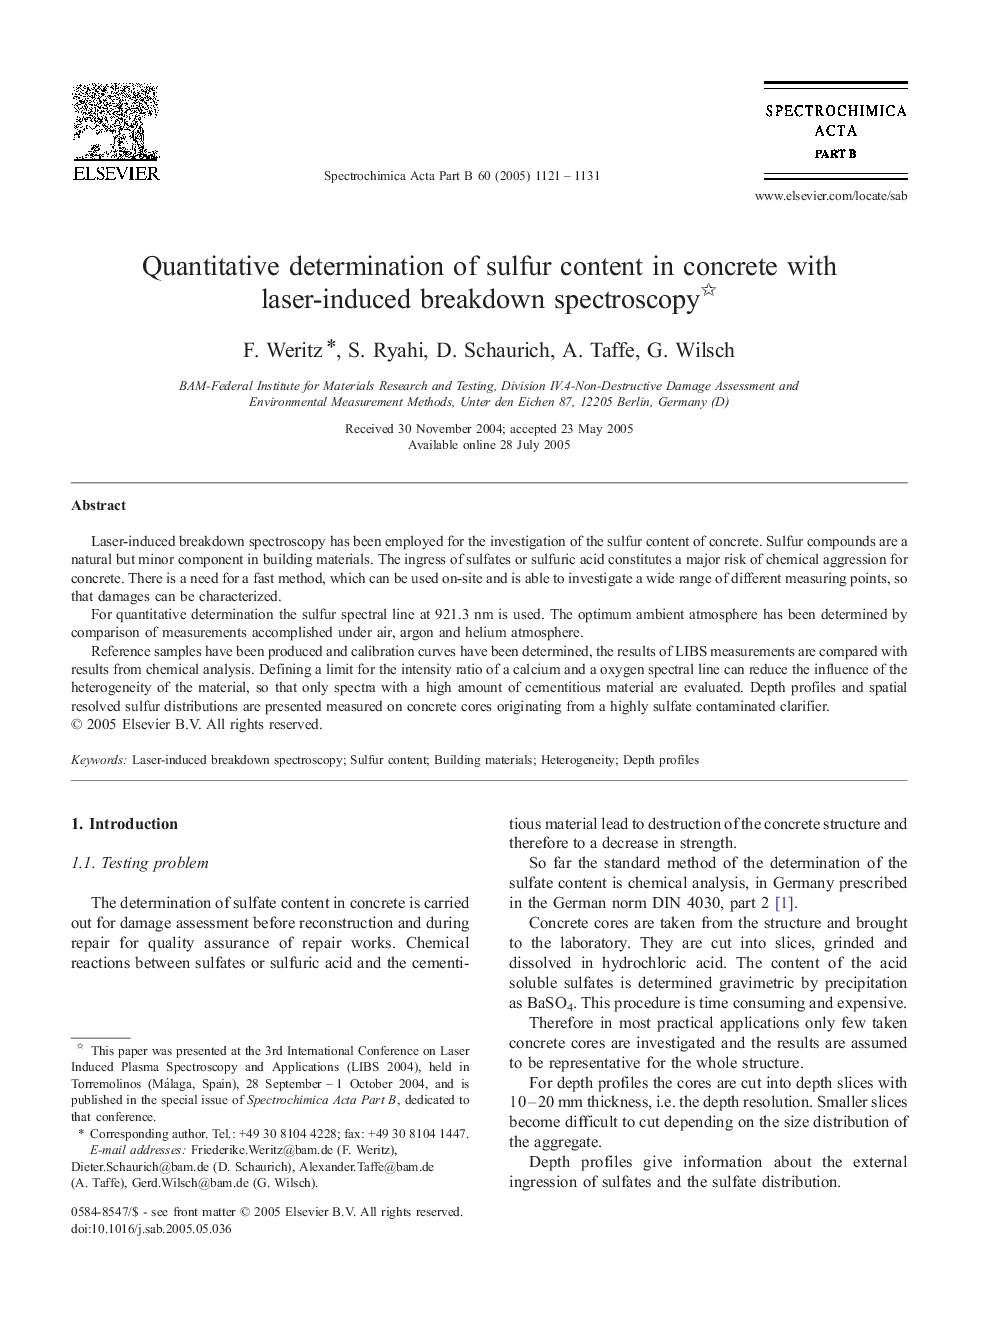 Quantitative determination of sulfur content in concrete with laser-induced breakdown spectroscopy